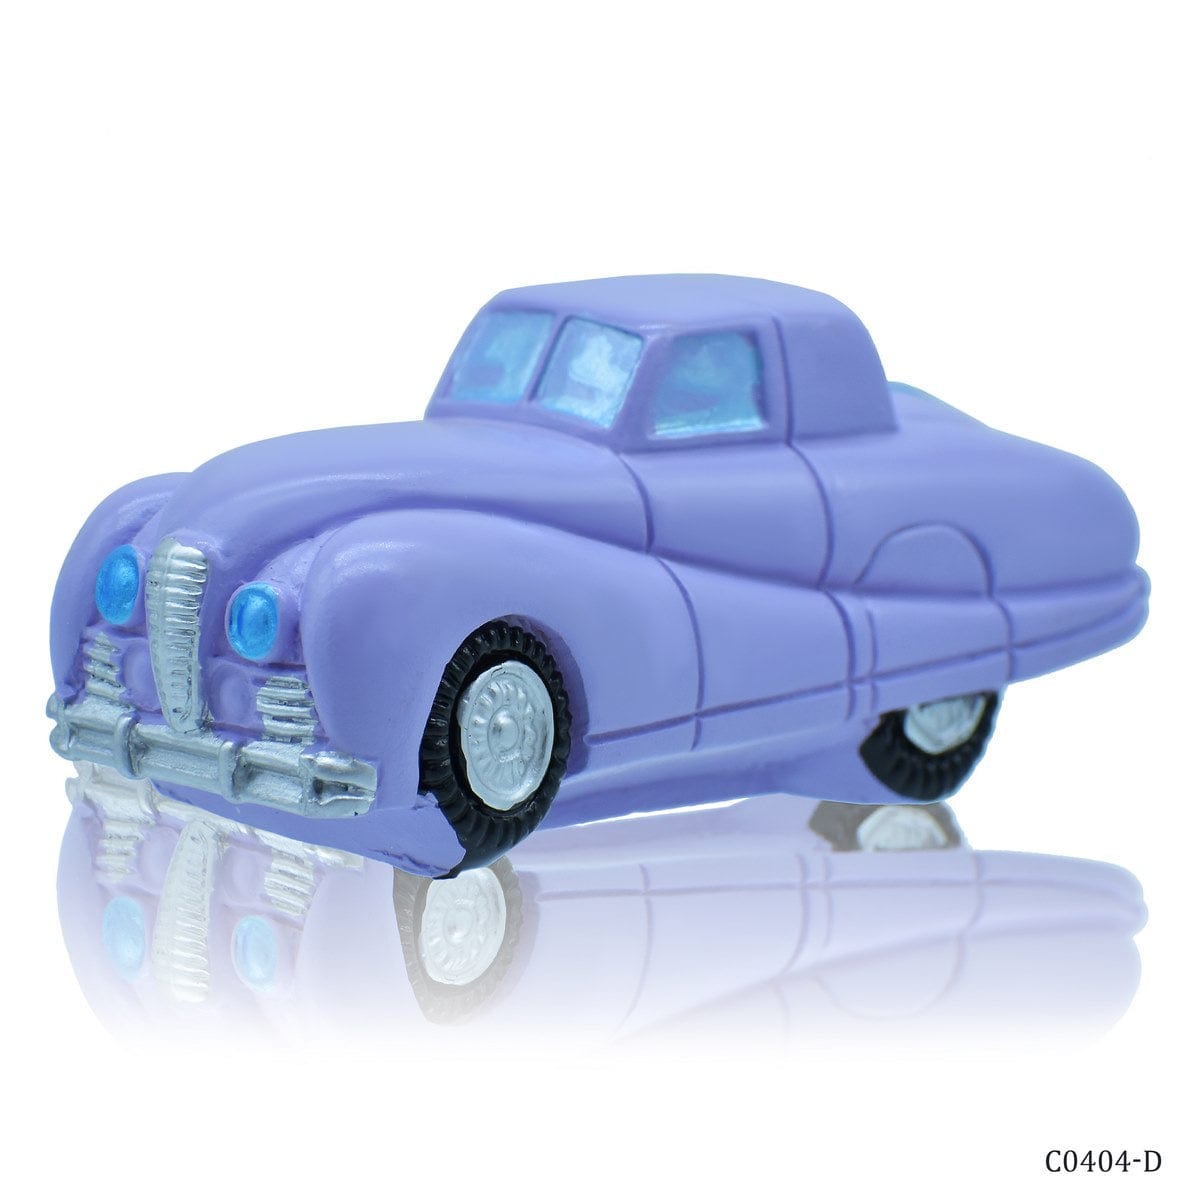 jags-mumbai Miniatures Miniature Model Car